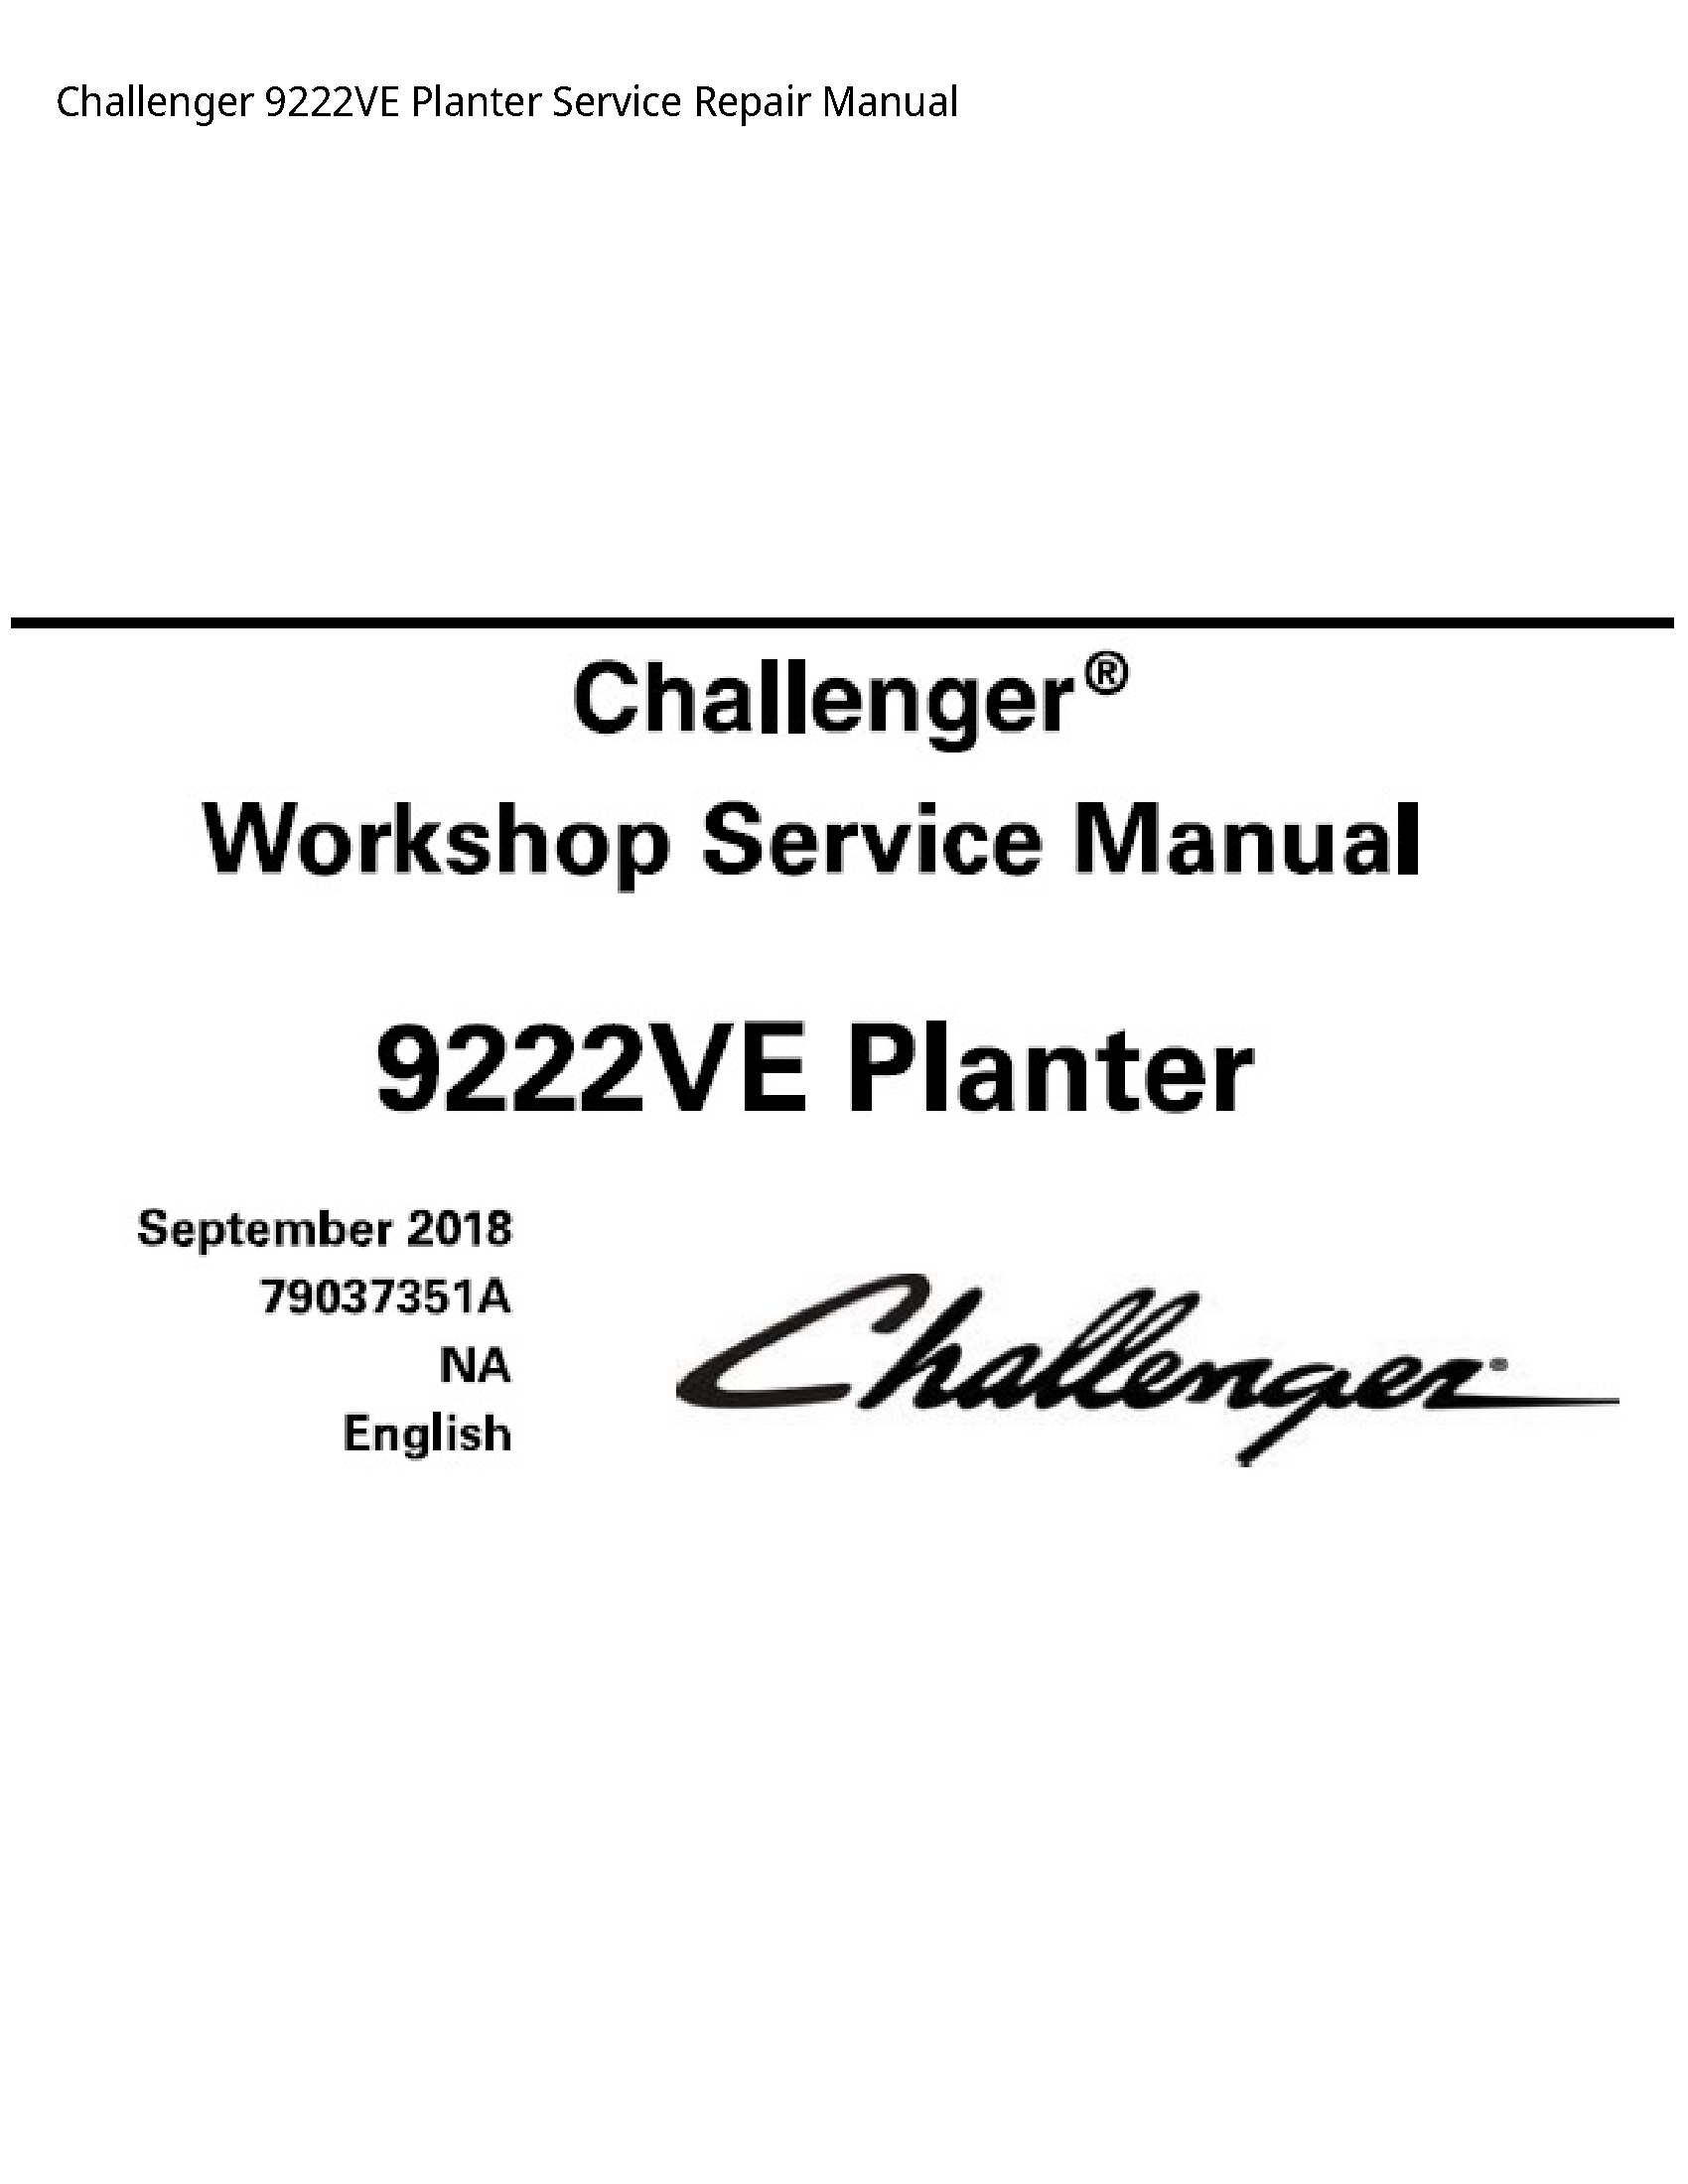 Challenger 9222VE Planter manual